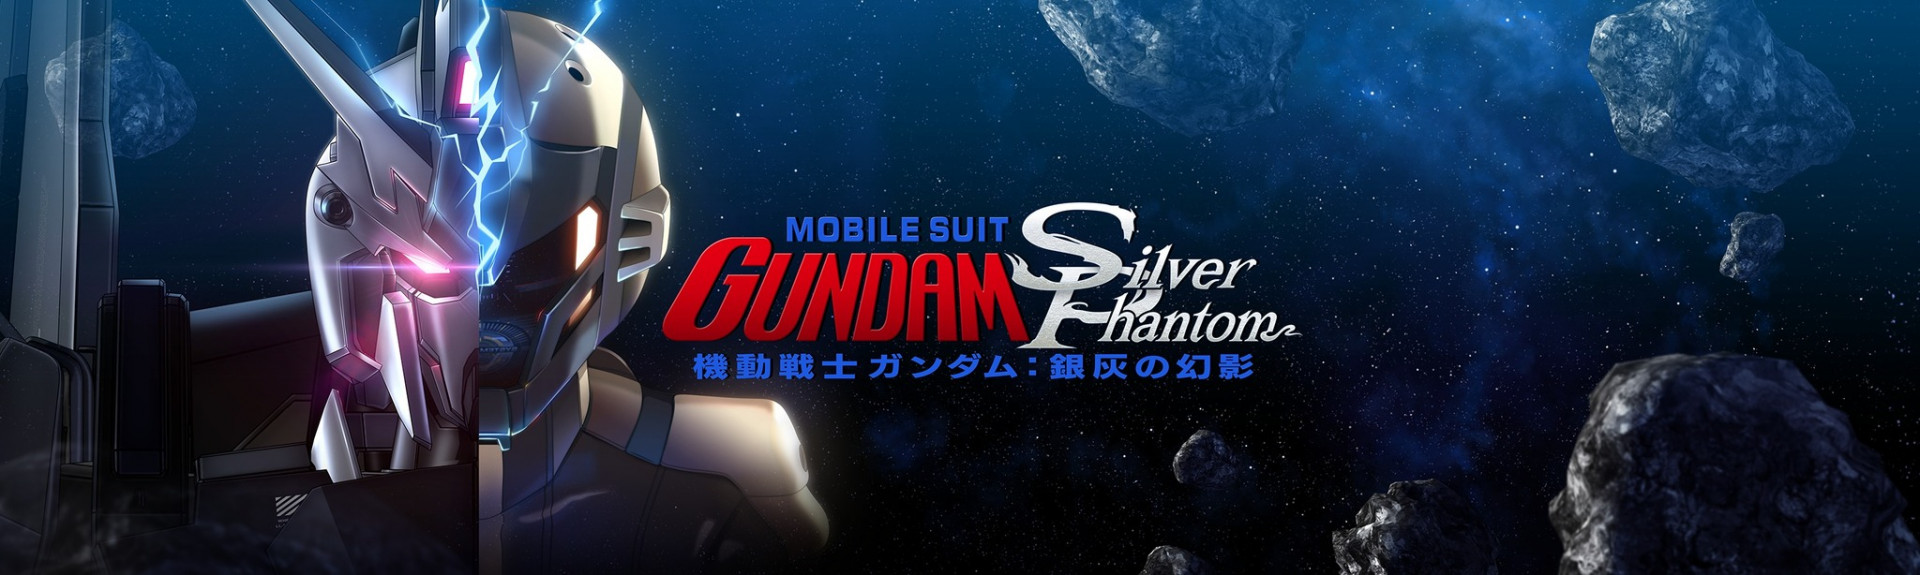 Mobile Suit Gundam: Silver Phantom